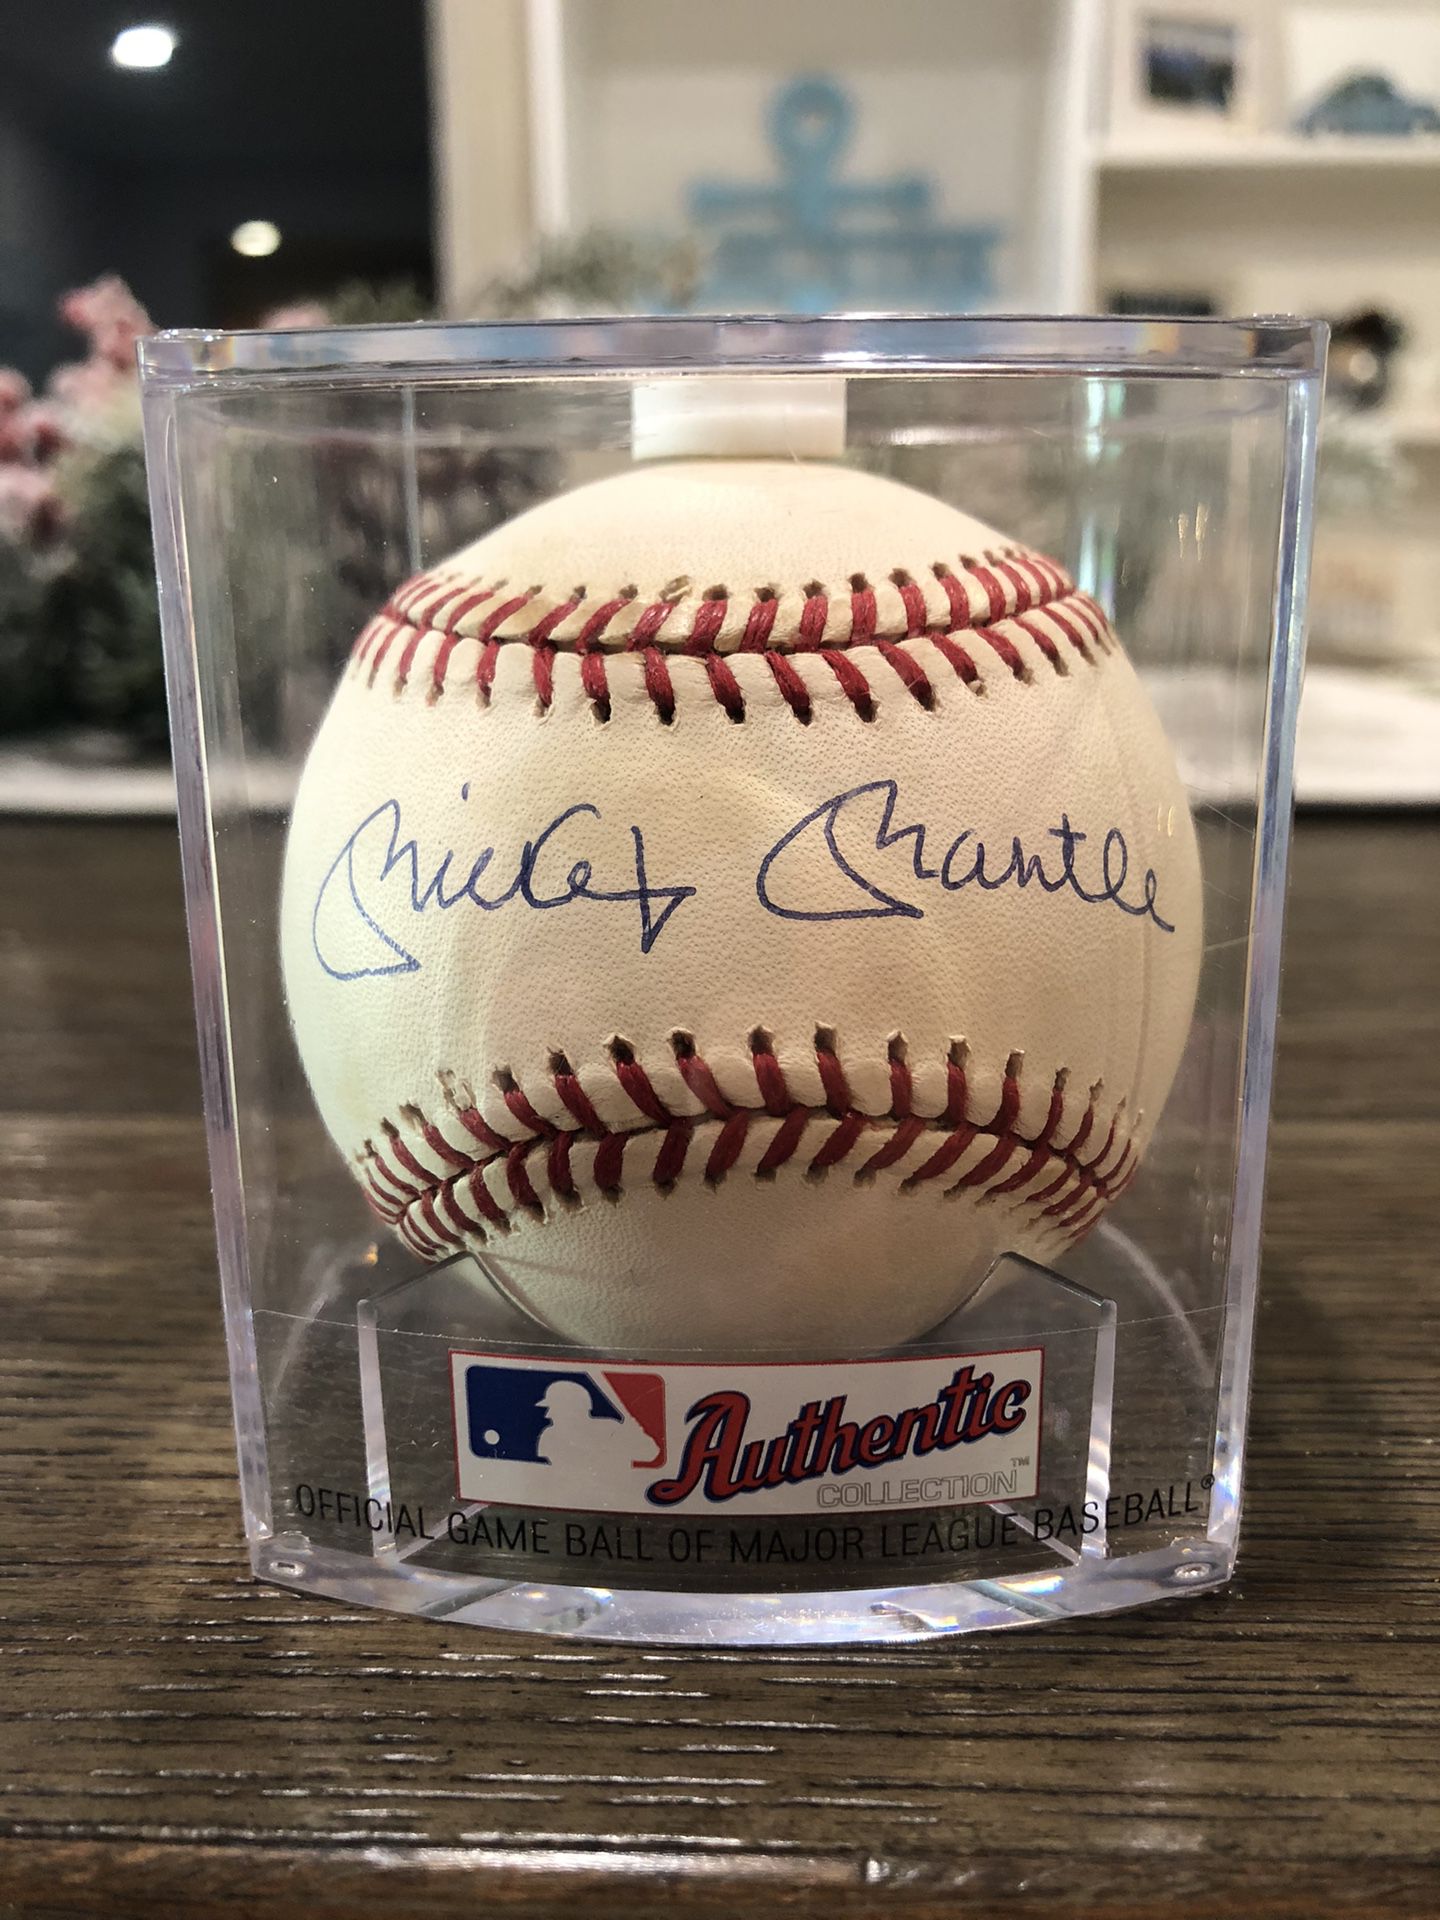 Mickey Mantle Autographed Signed Major League Baseball No. 7